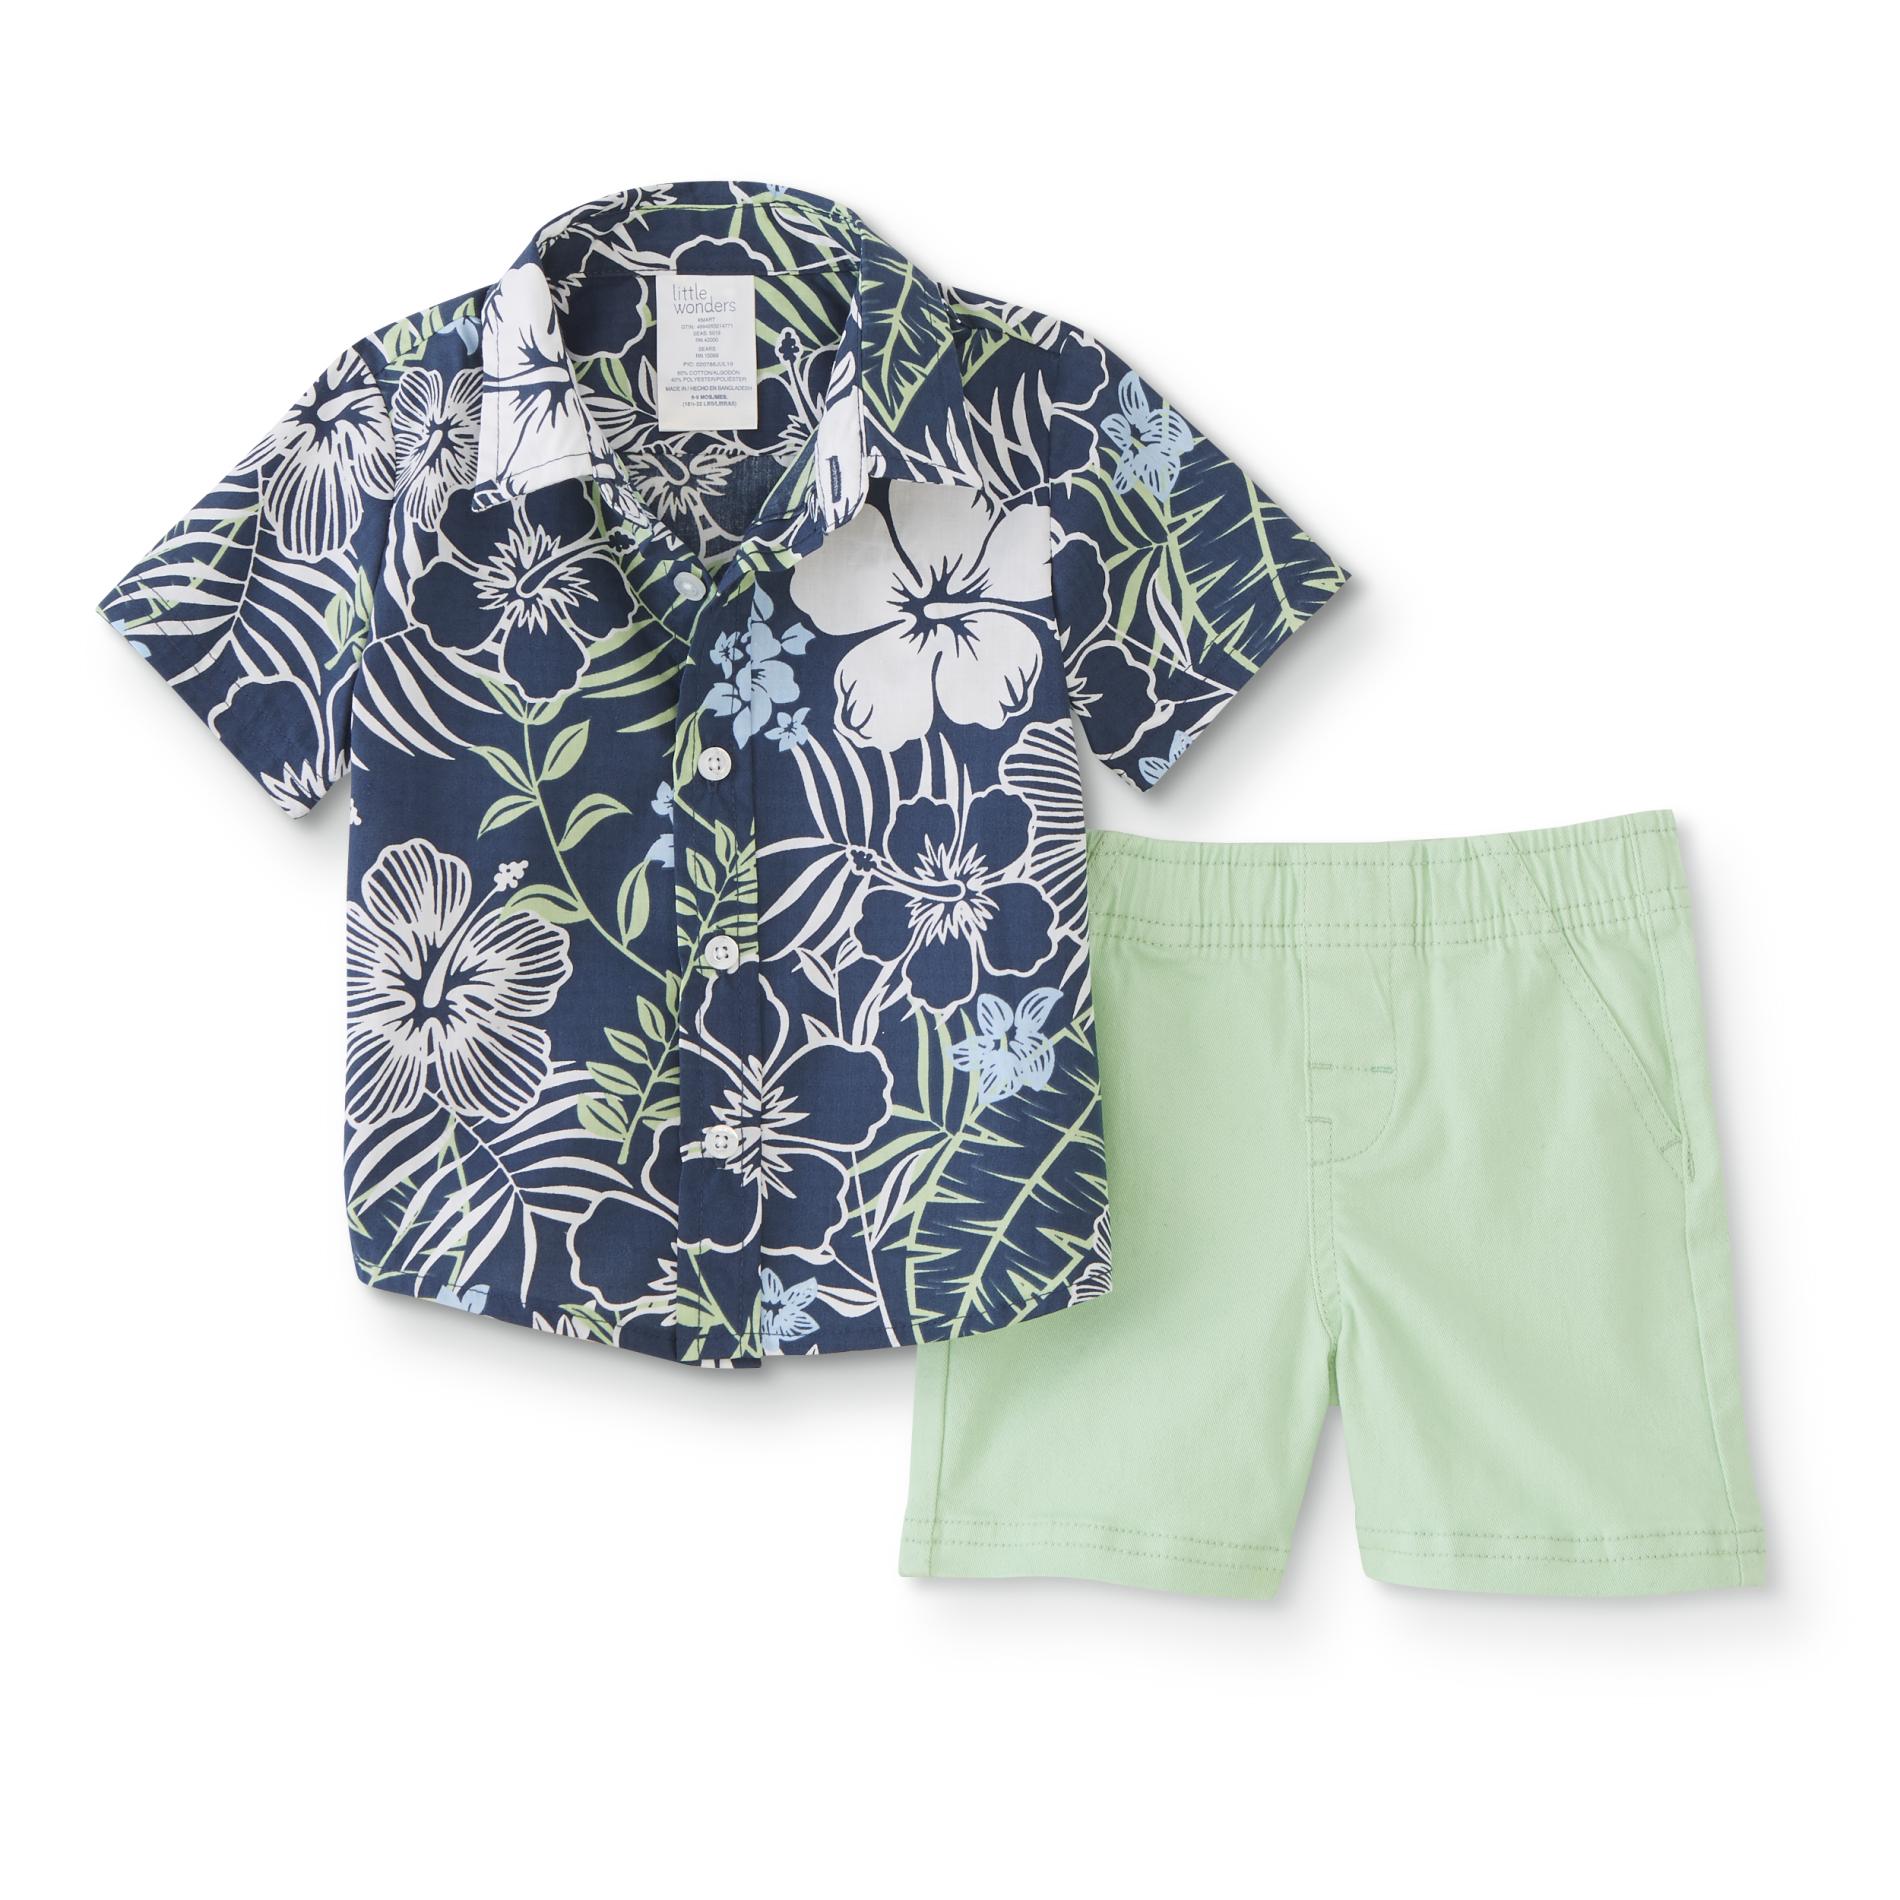 Little Wonders Infant Boys' Shirt & Shorts - Tropical